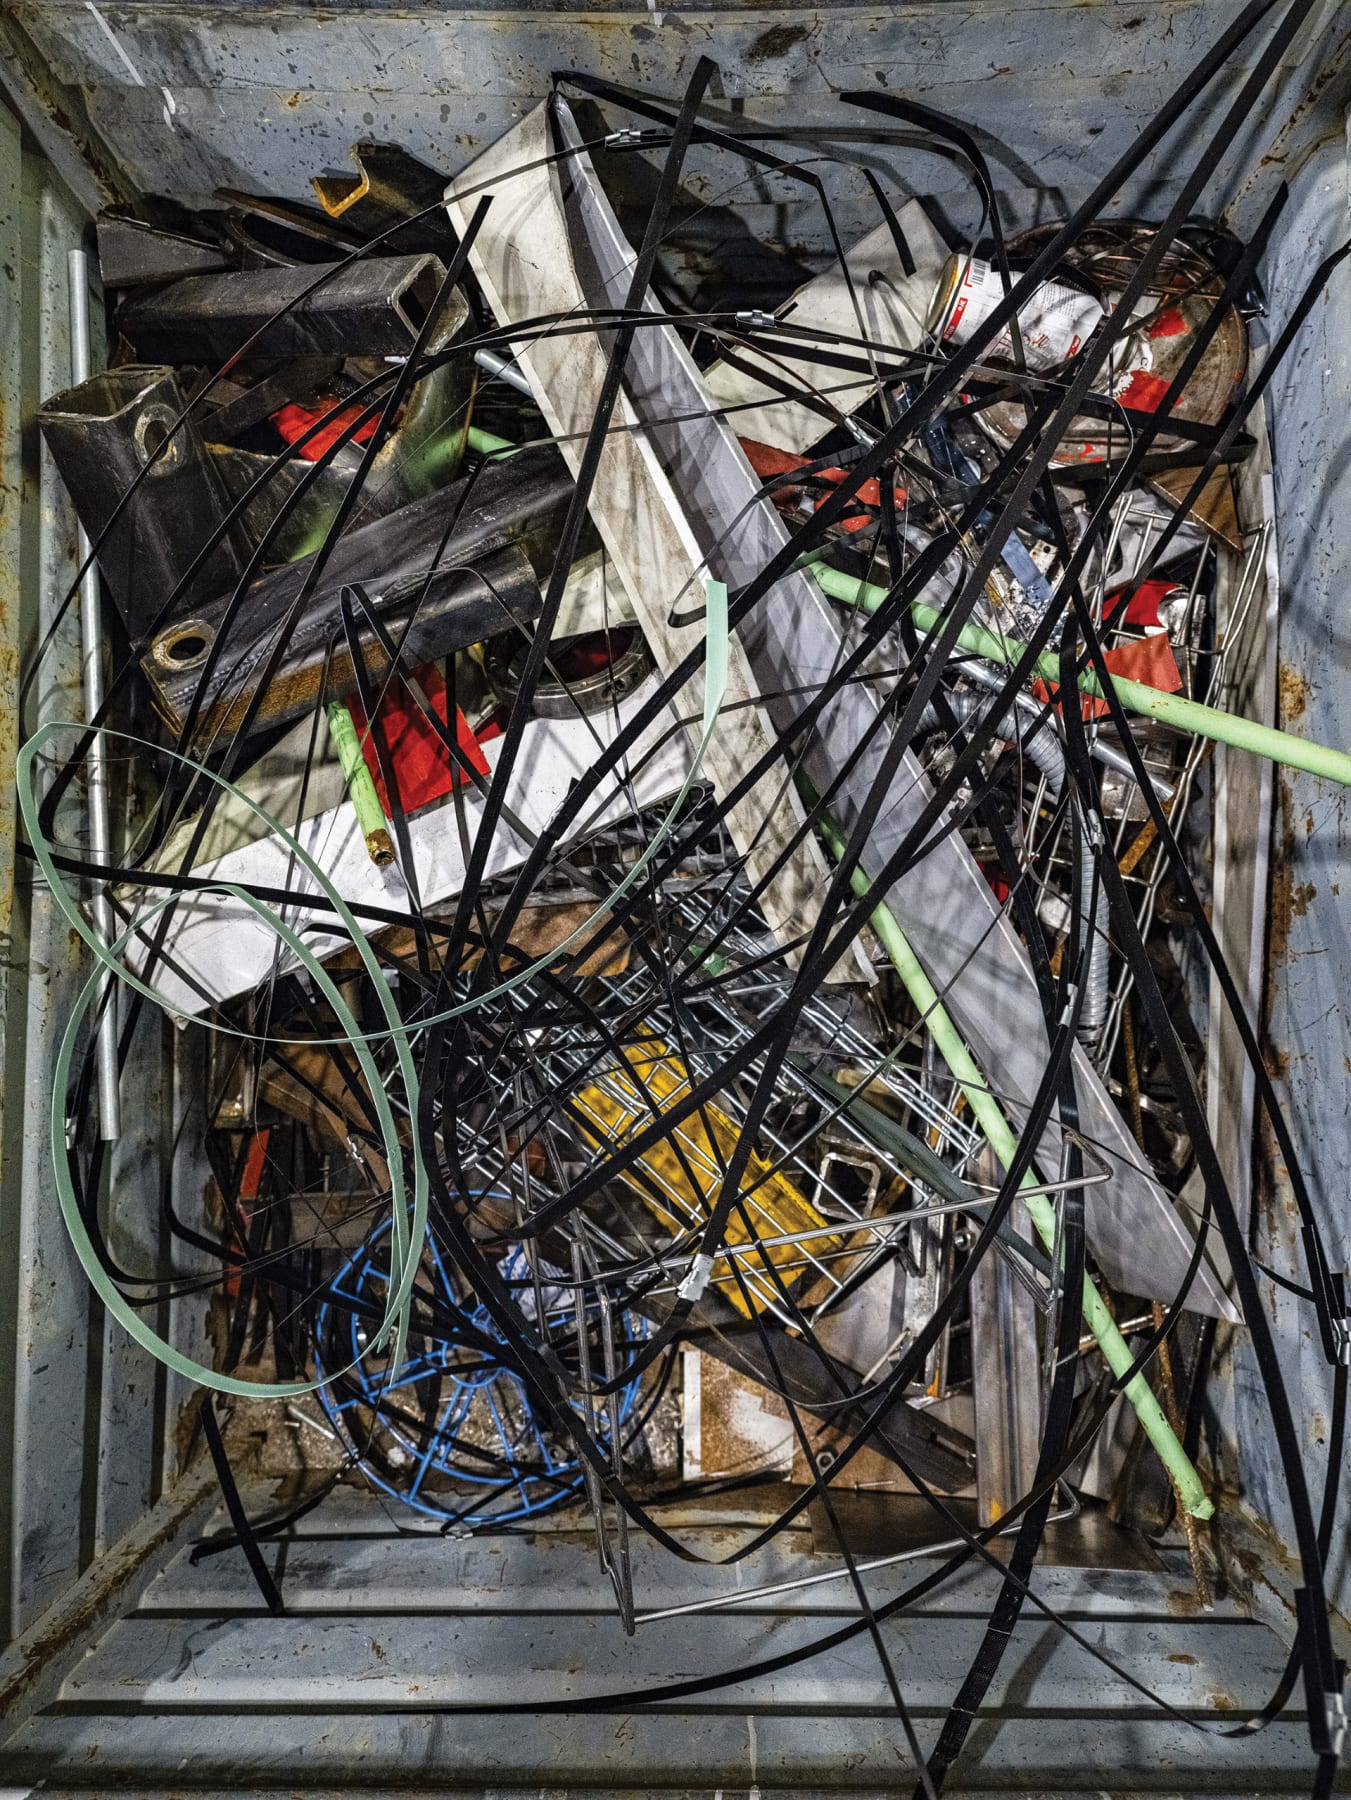 Photograph of entangled metal scraps